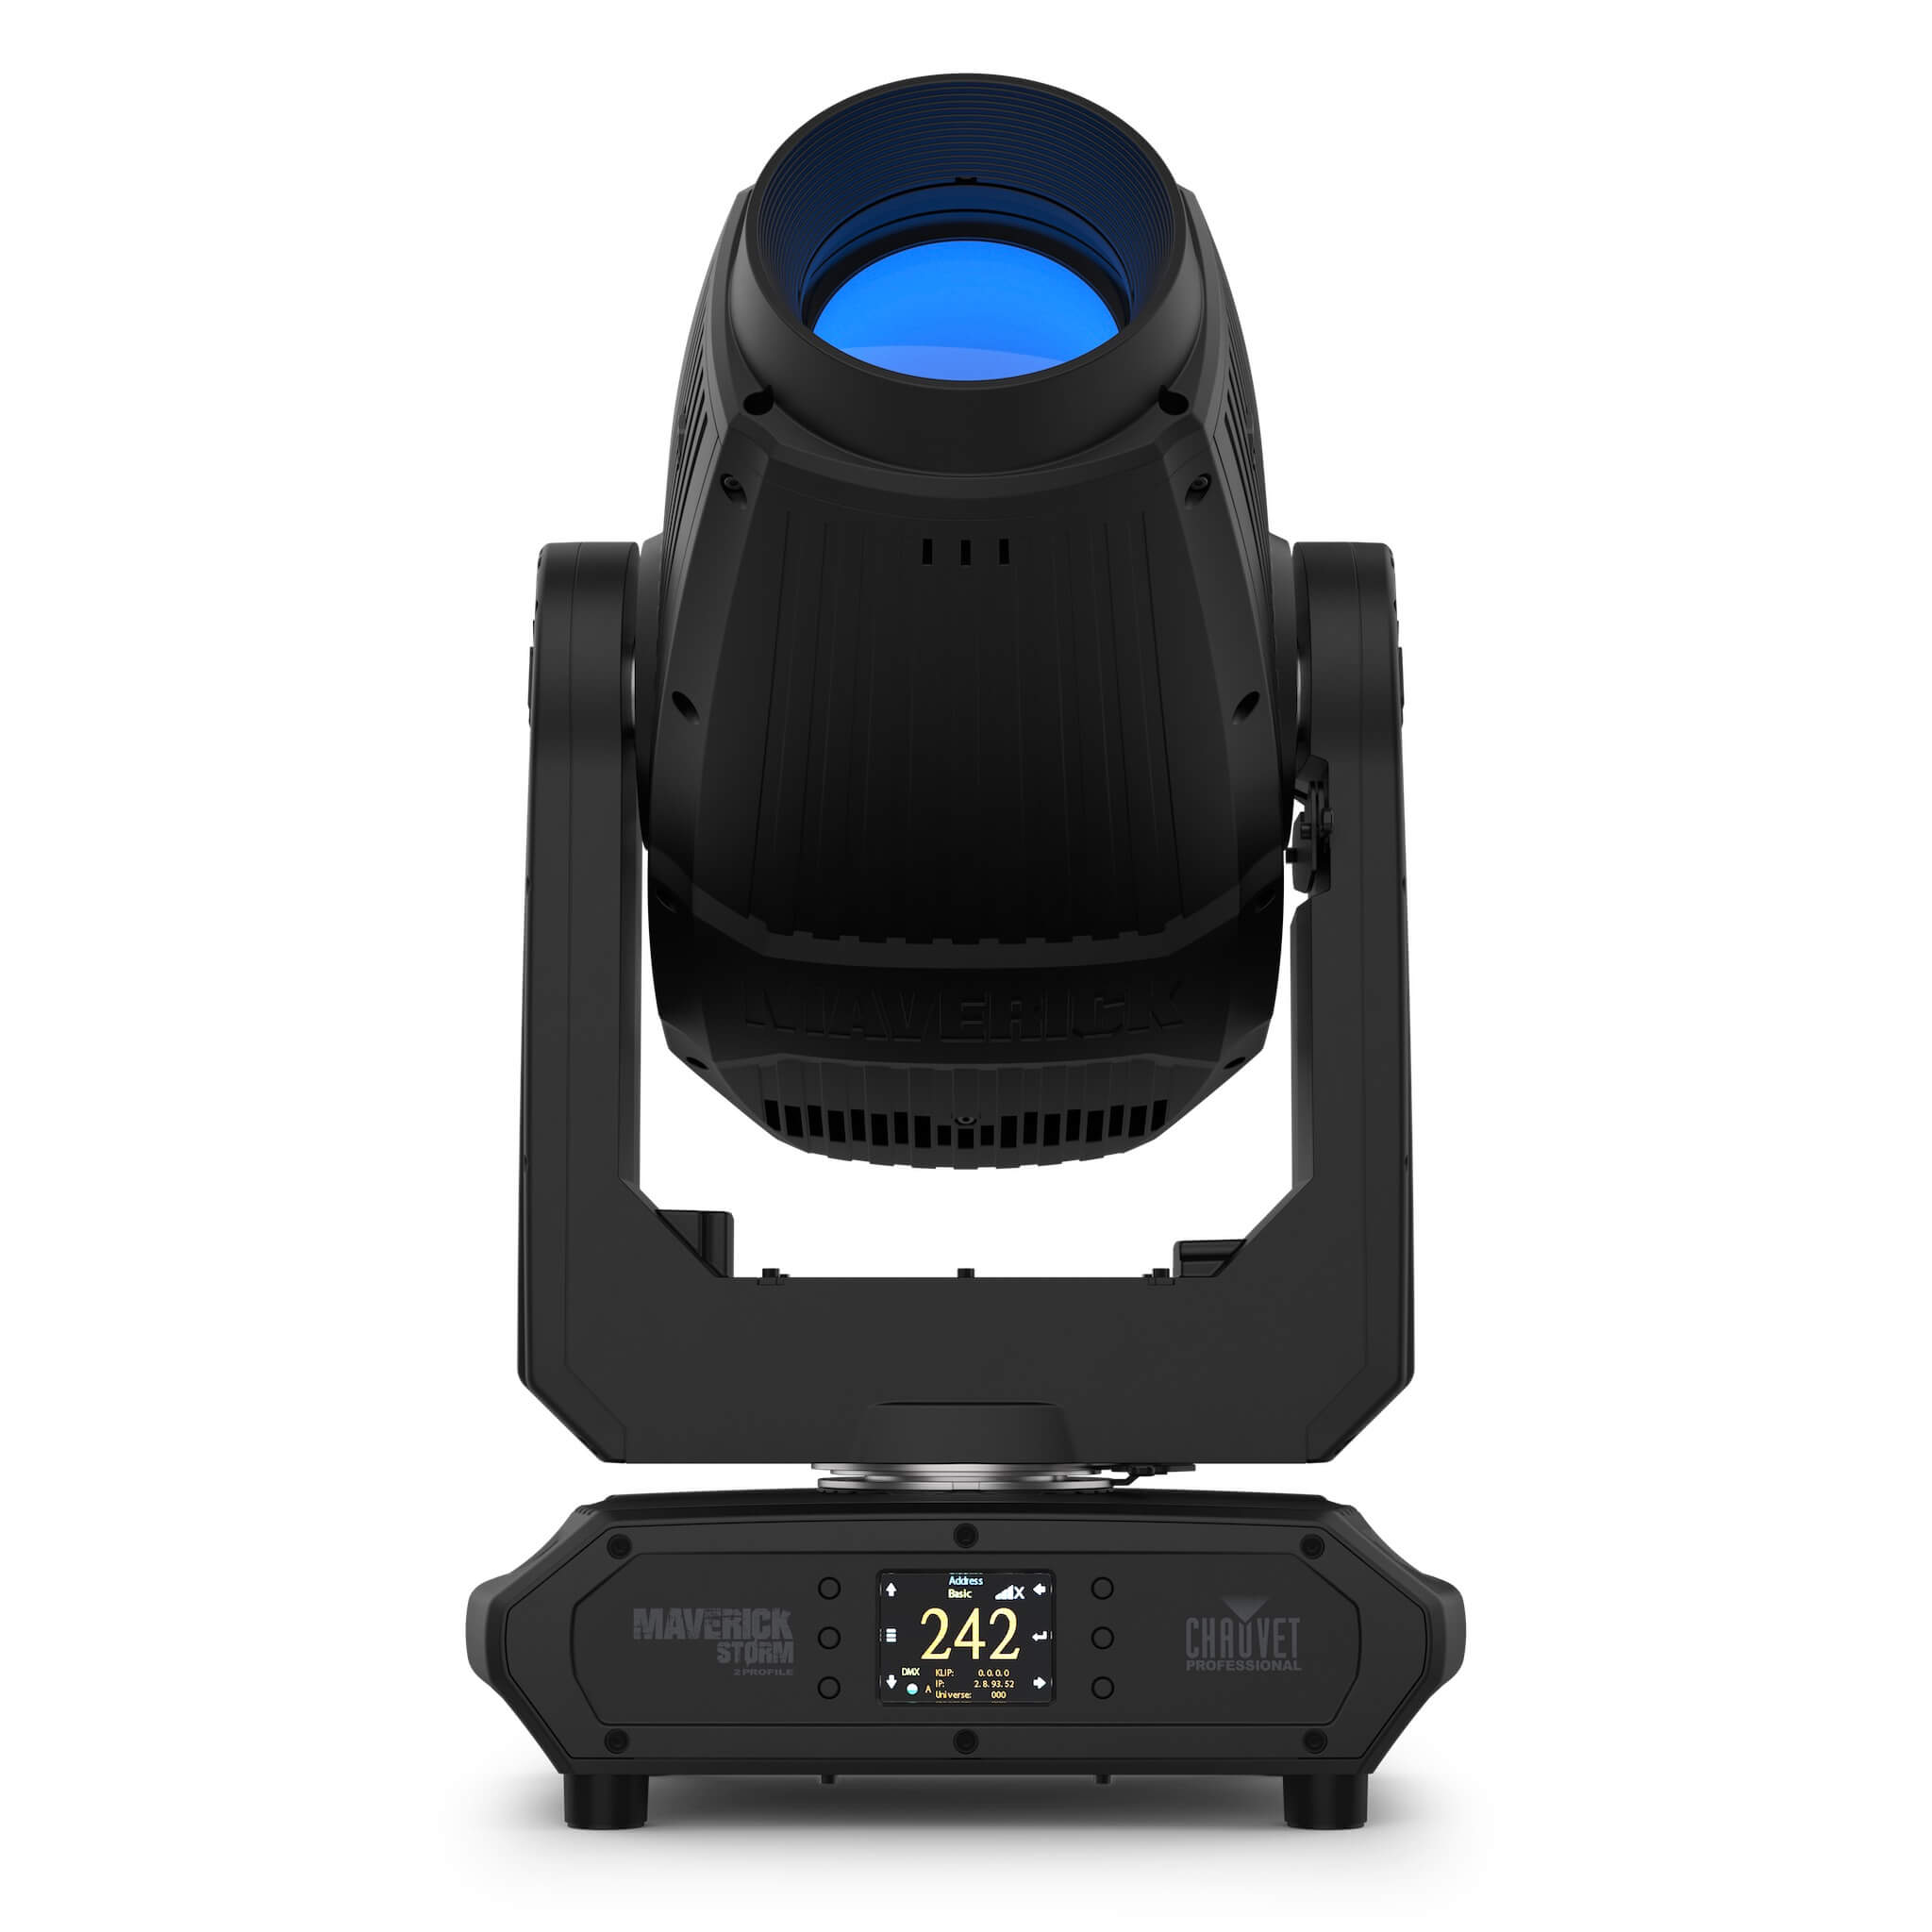 Chauvet Professional Maverick Storm 2 Profile - LED Moving Head Light, front